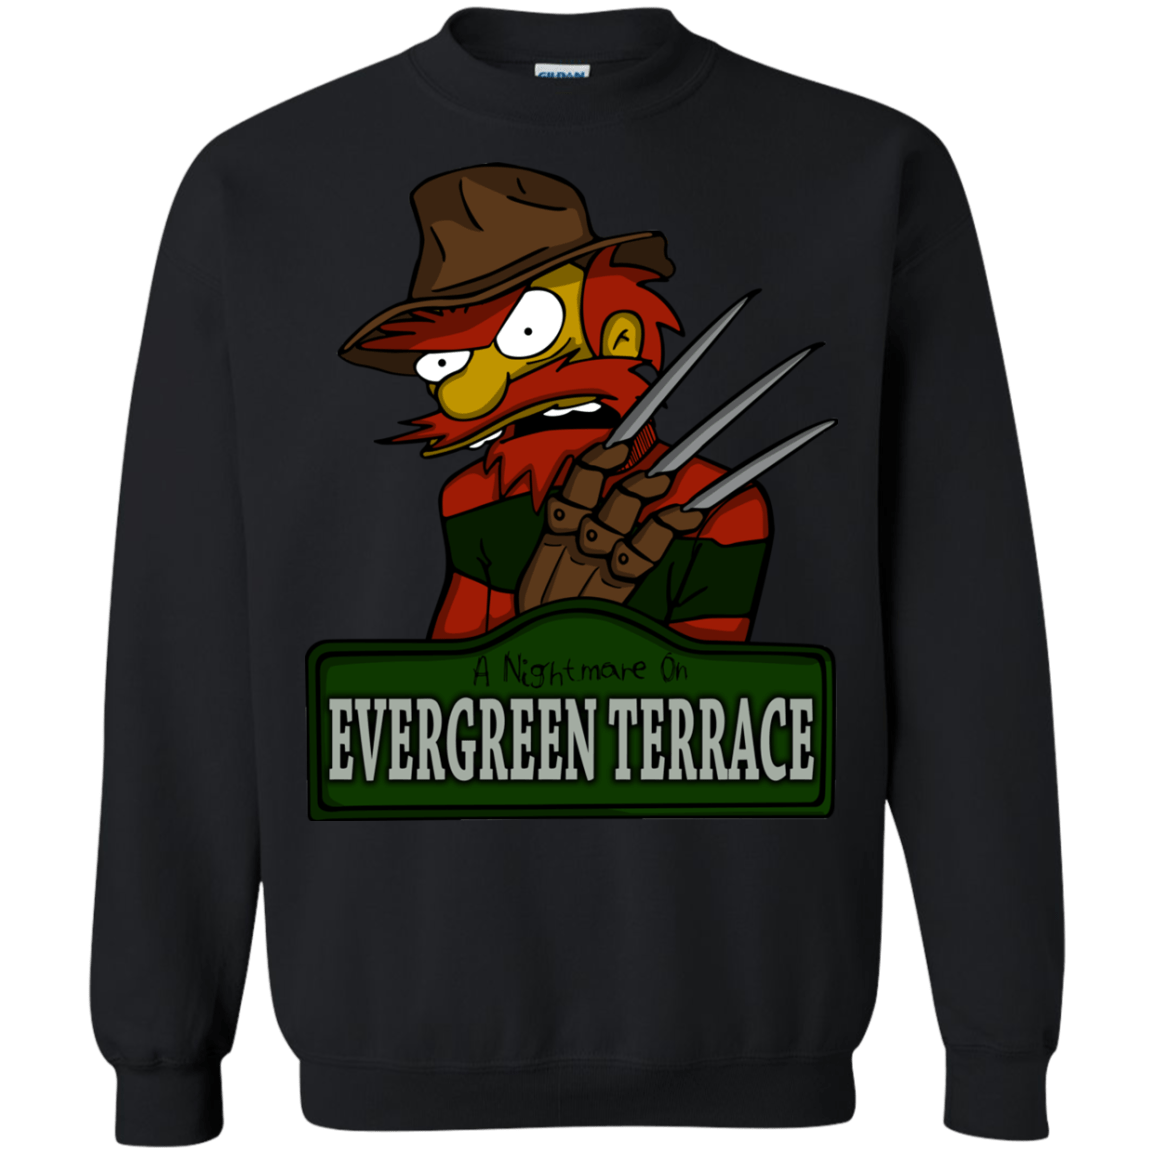 Sweatshirts Black / Small A Nightmare on Springfield Sin Tramas Crewneck Sweatshirt